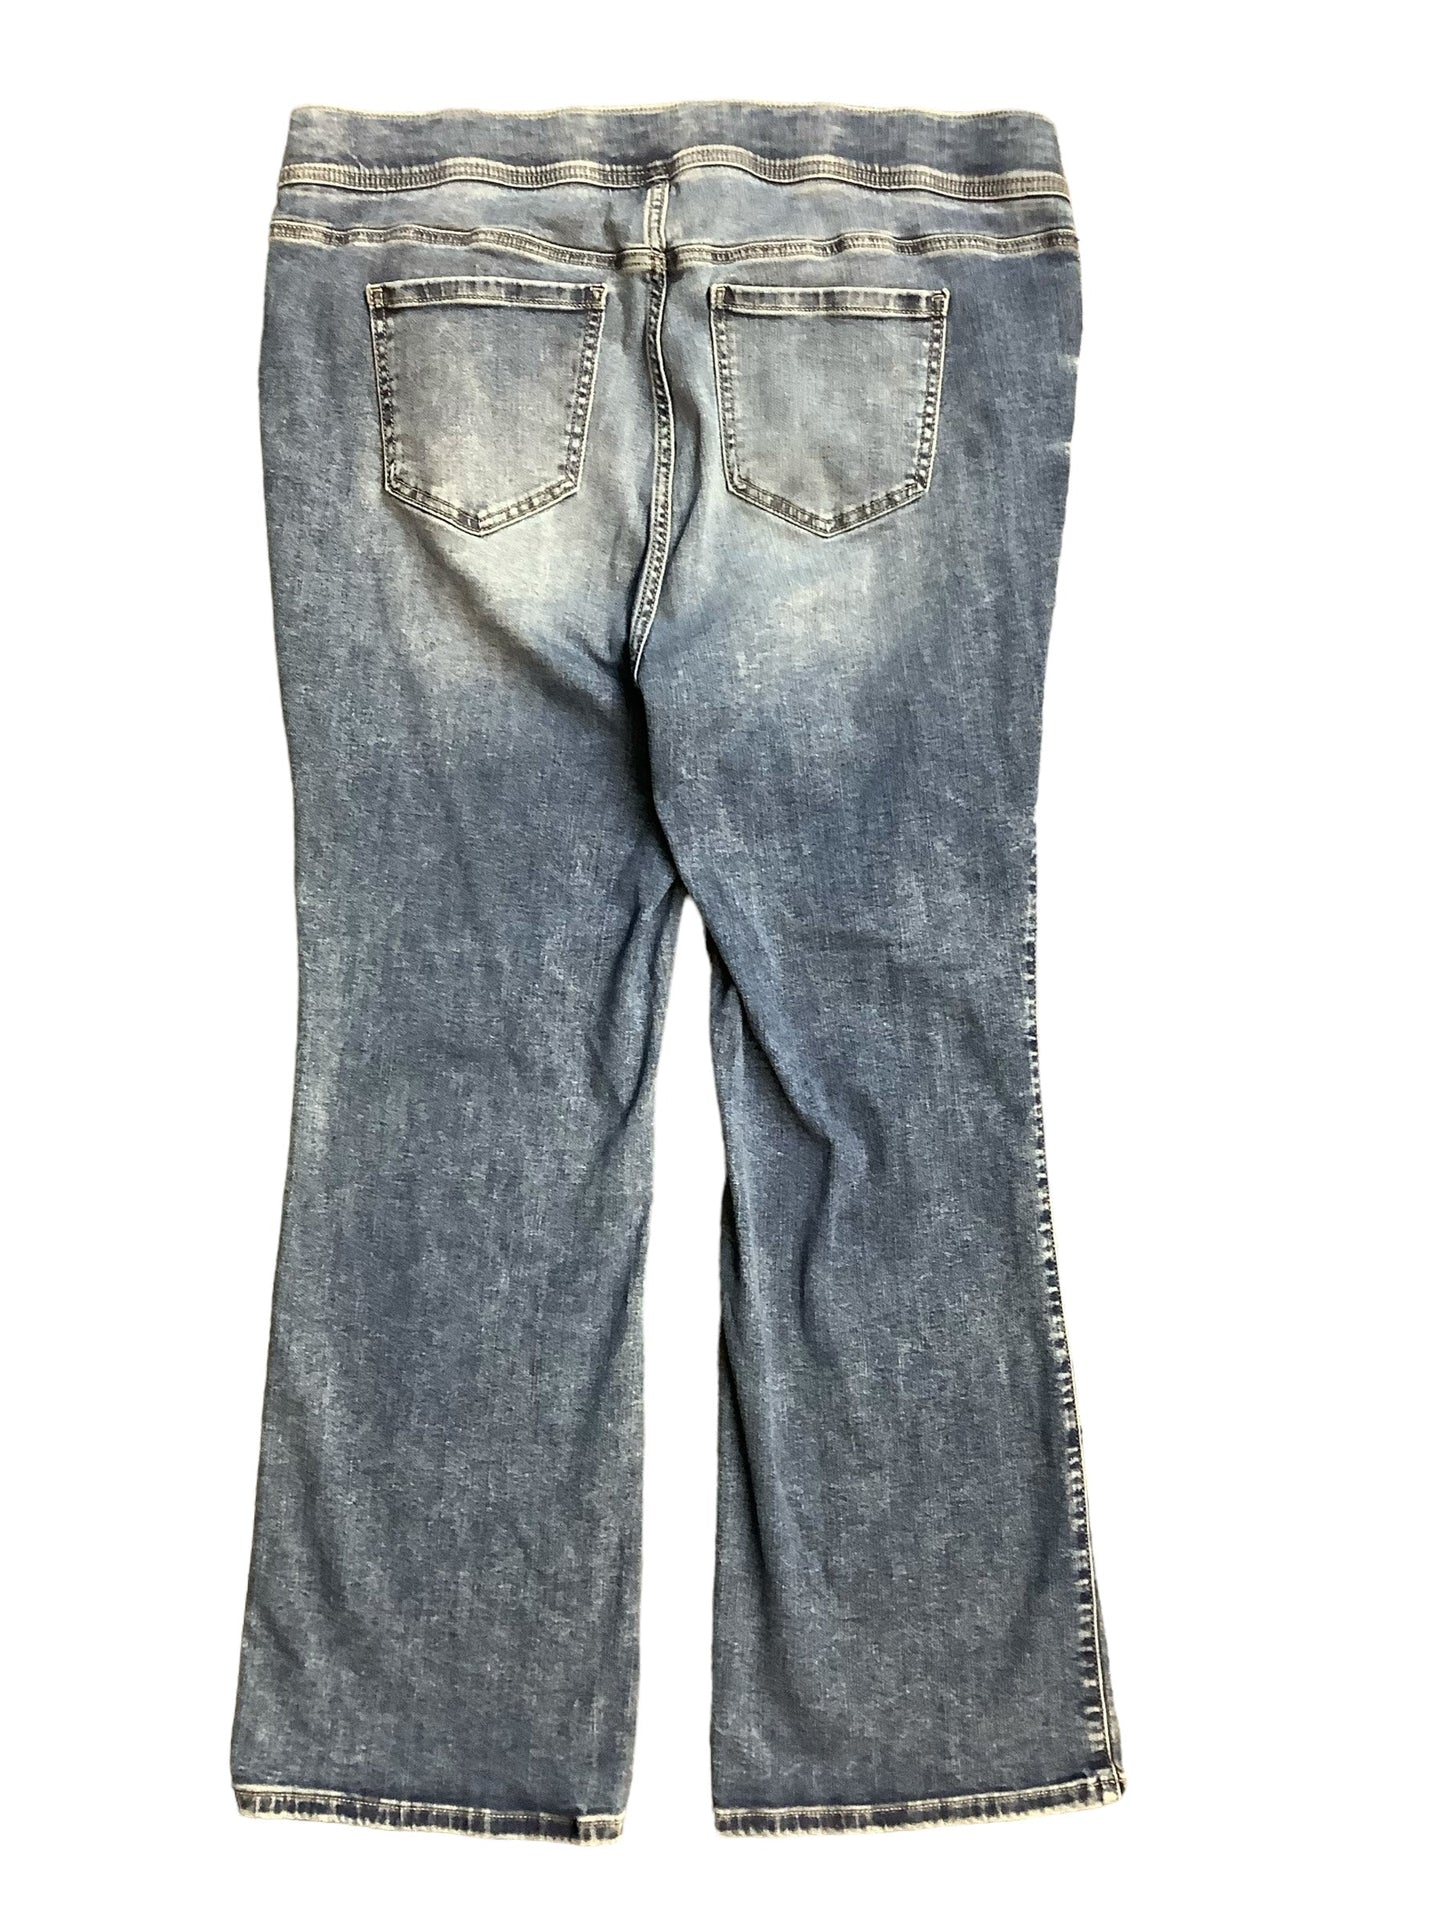 Blue Denim Jeans Boot Cut Torrid, Size 2x